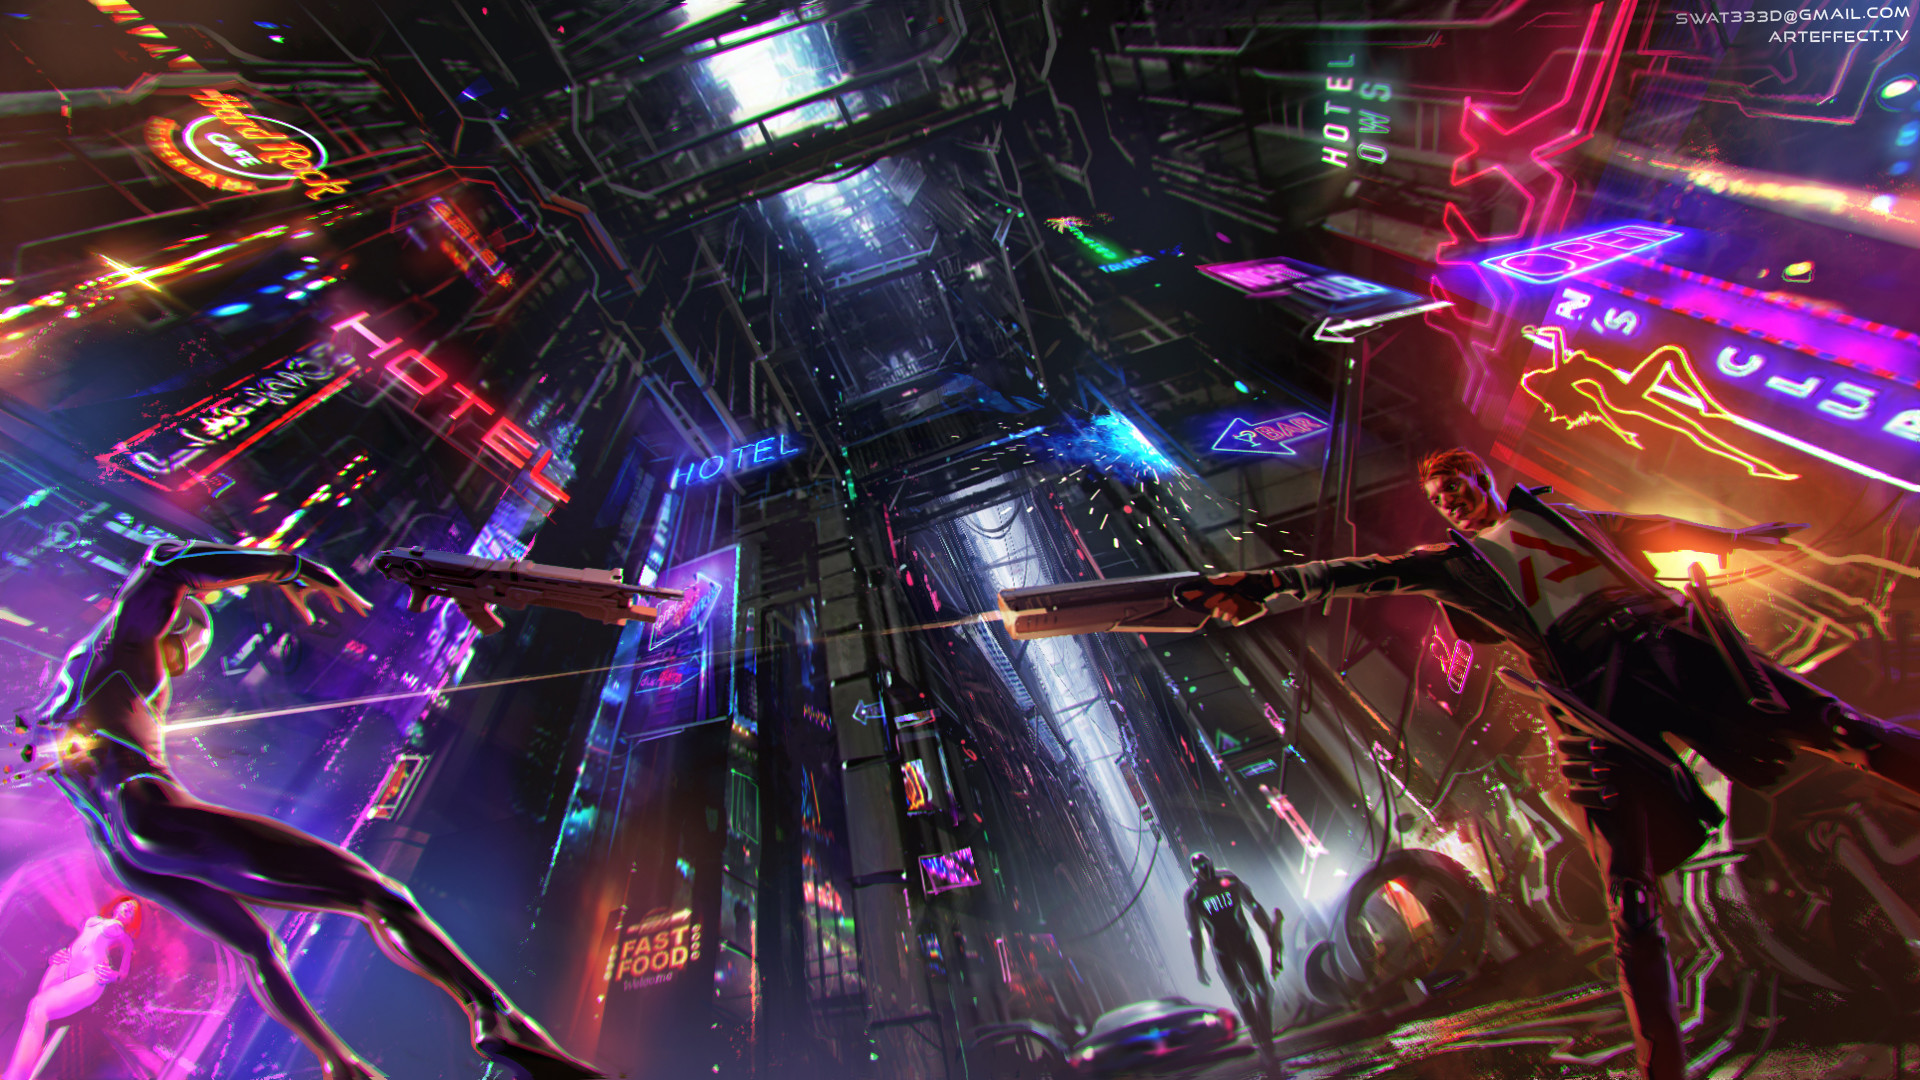 General 1920x1080 artwork digital art concept art cyberpunk science fiction futuristic neon futuristic city men